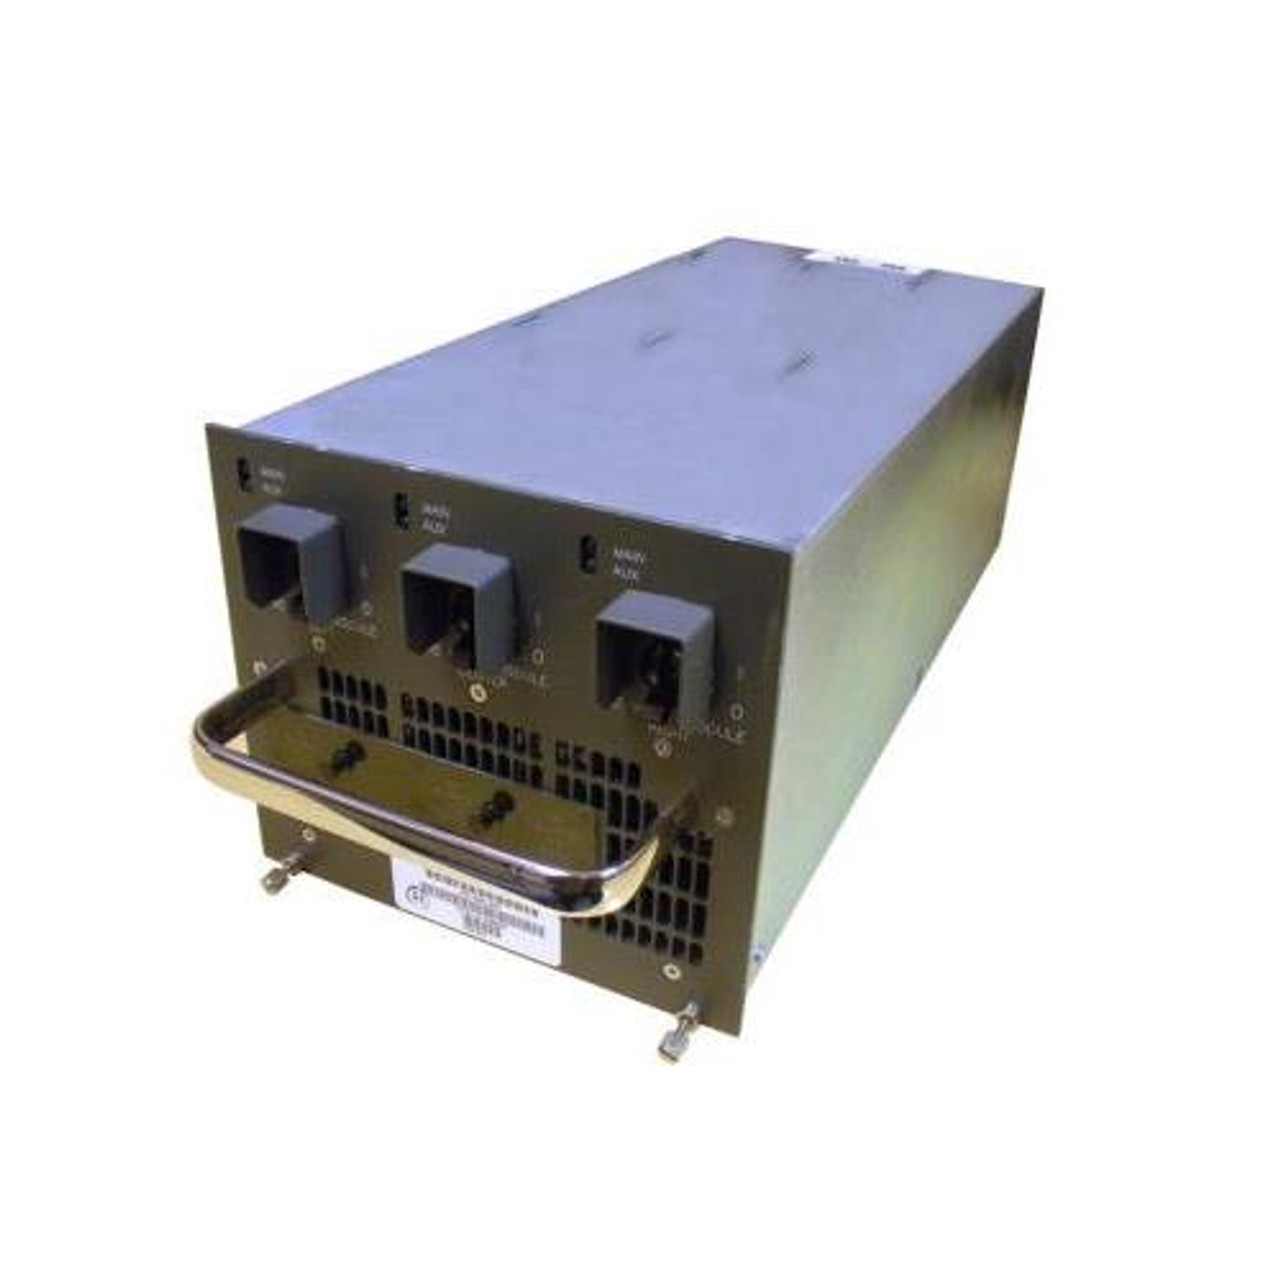 075-000-008 EMC Symmetrix AC Power Supply Input Module